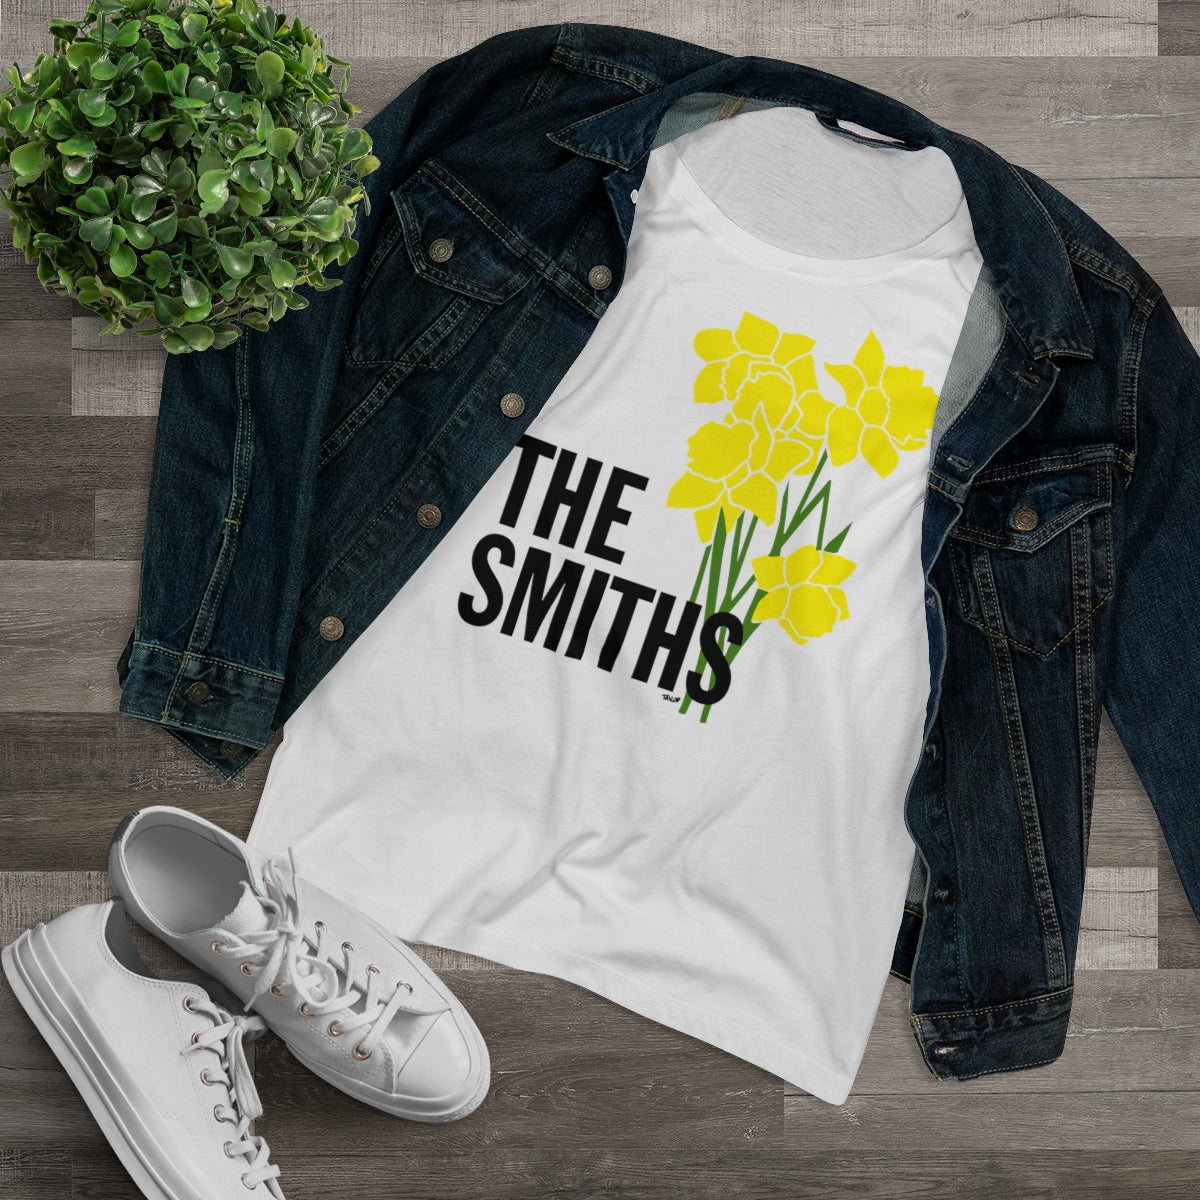 THE SMITHS - Tour 1983 - Women's T Shirt